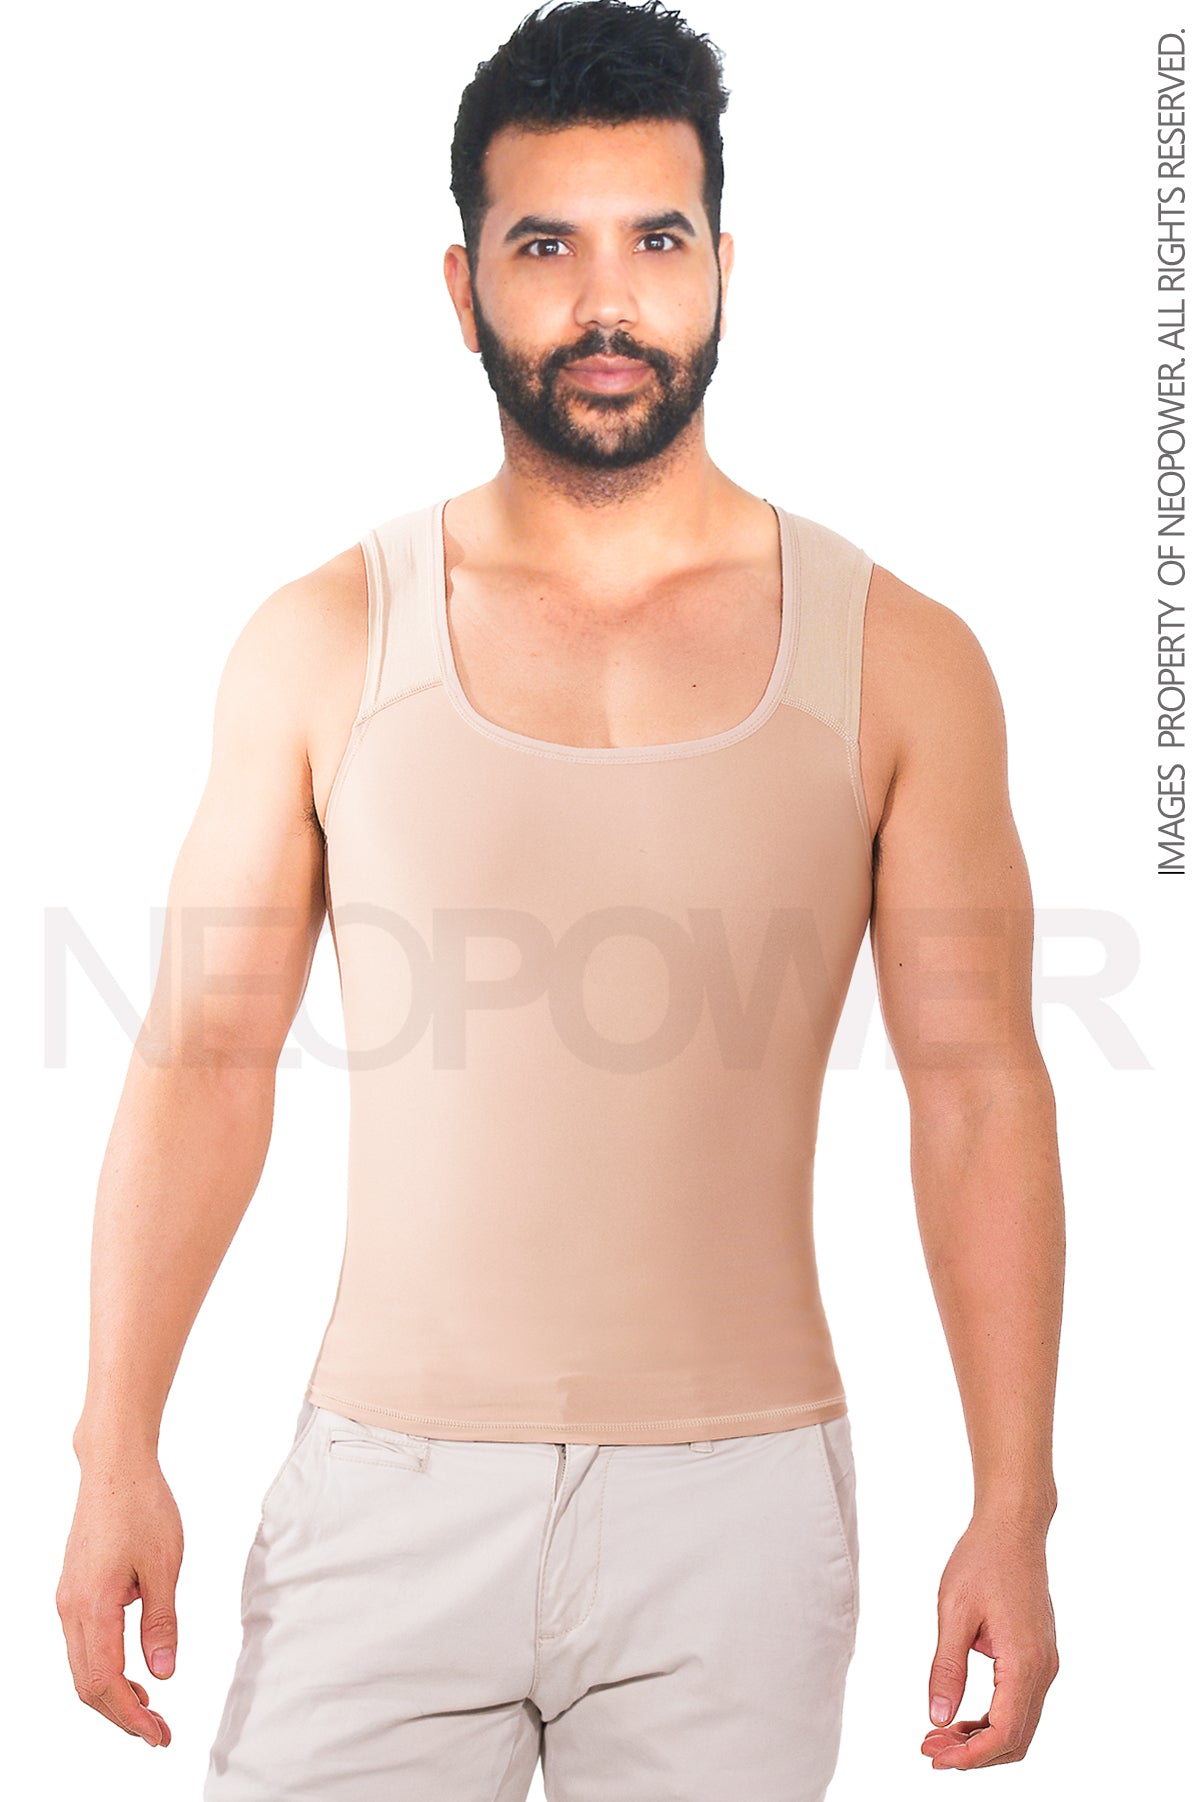 Faja camiseta para Hombre, invisible uso diario NEOPOWER – NEOFAJAS COLOMBIA